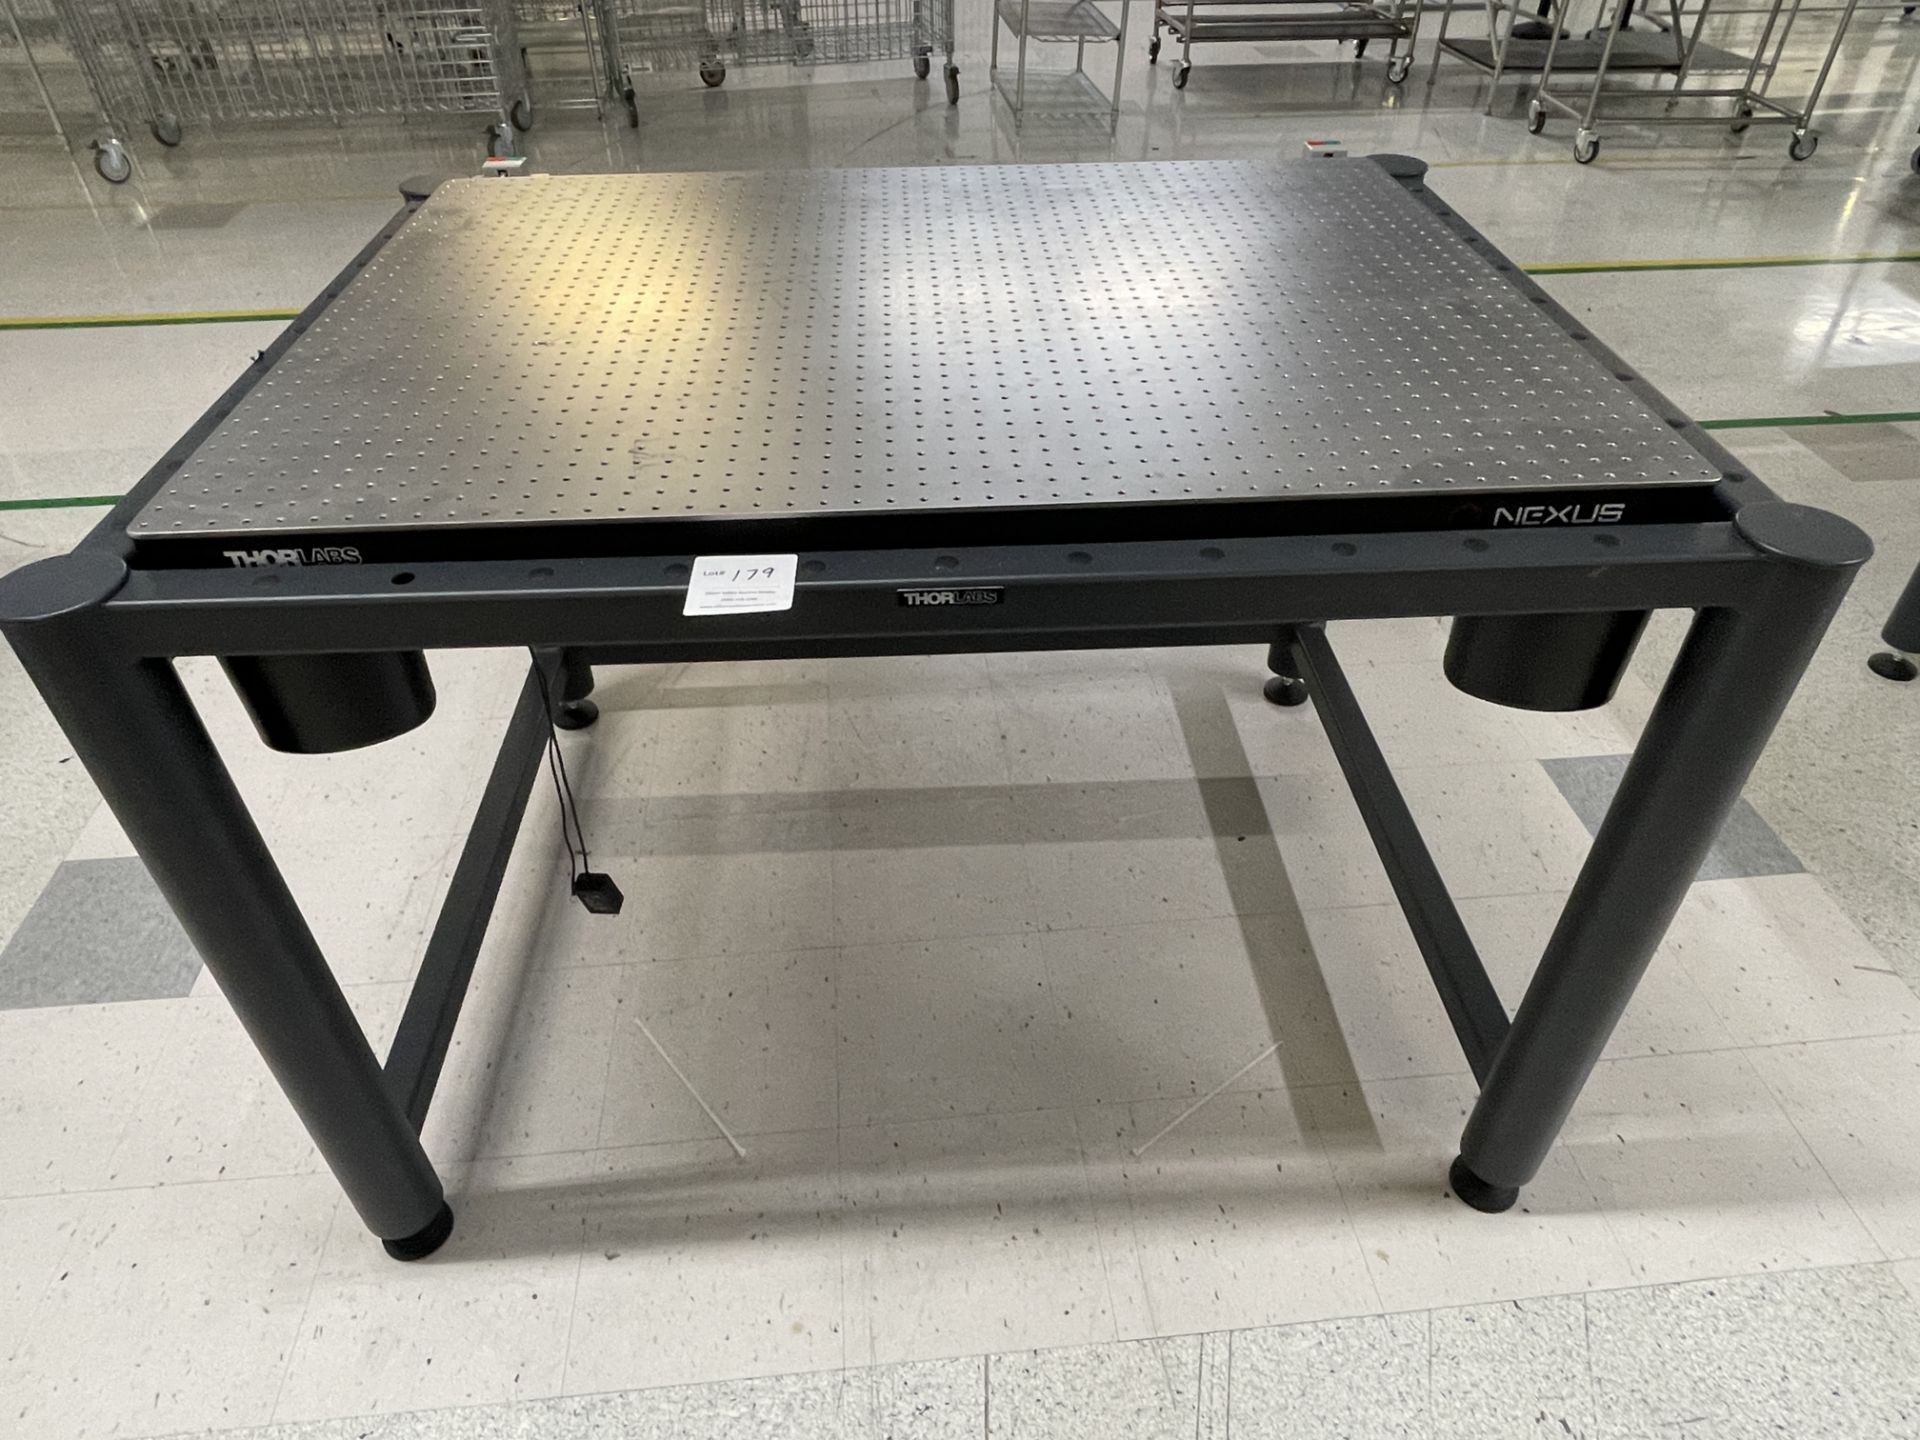 ThorLabs Optical Table (Nexus) Model B3648F 55" wide x 43" deep x 36" high